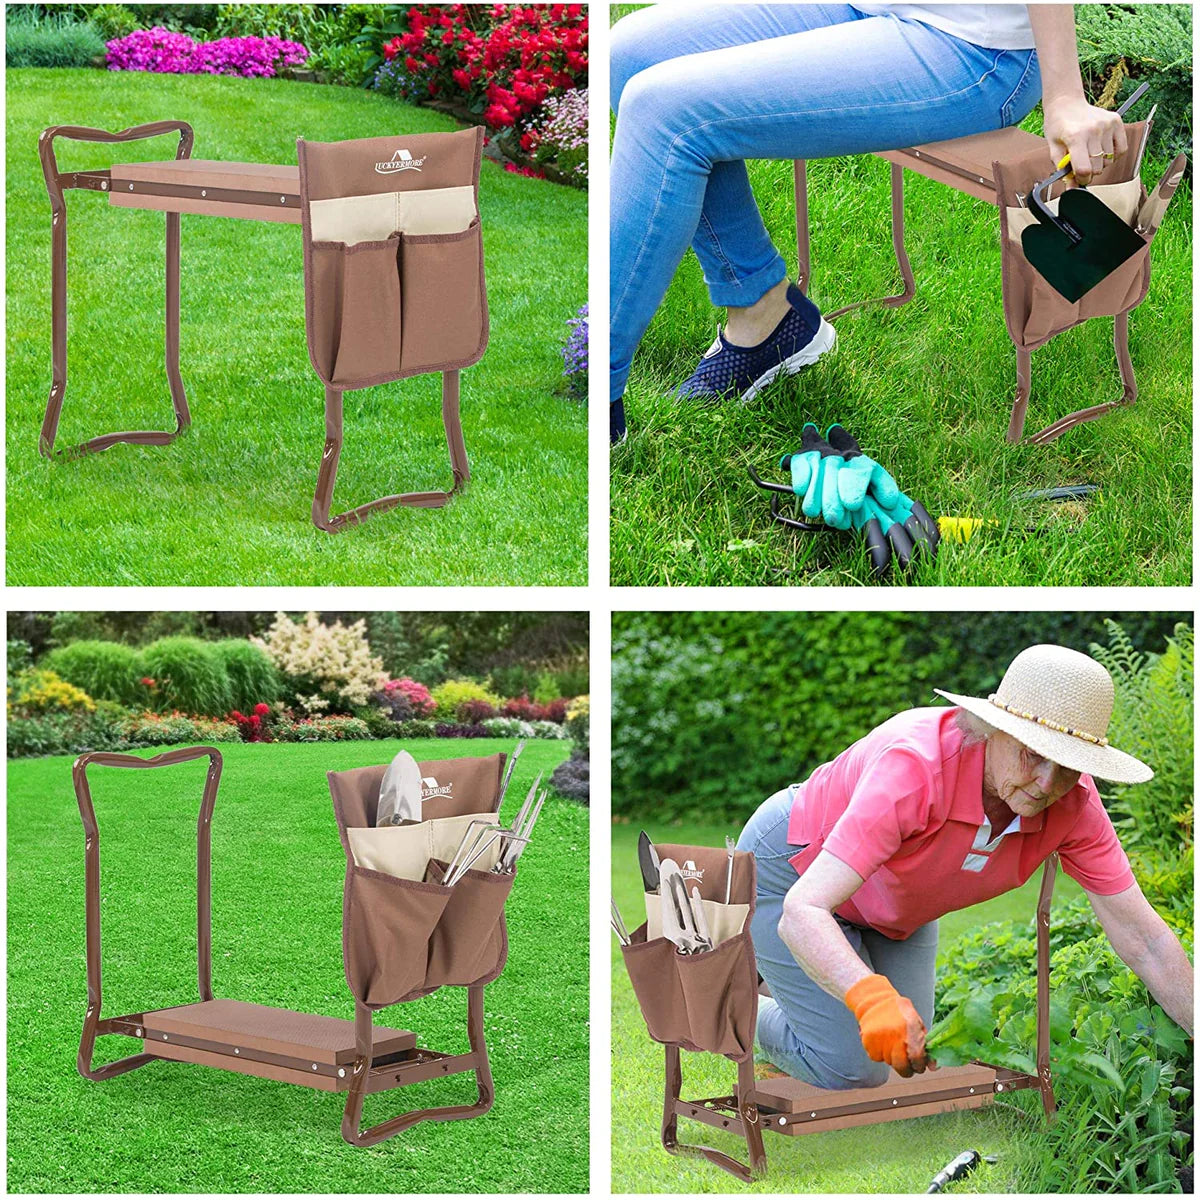 Portable Foldable Garden Kneeler Bench with Tools Bag, Brown